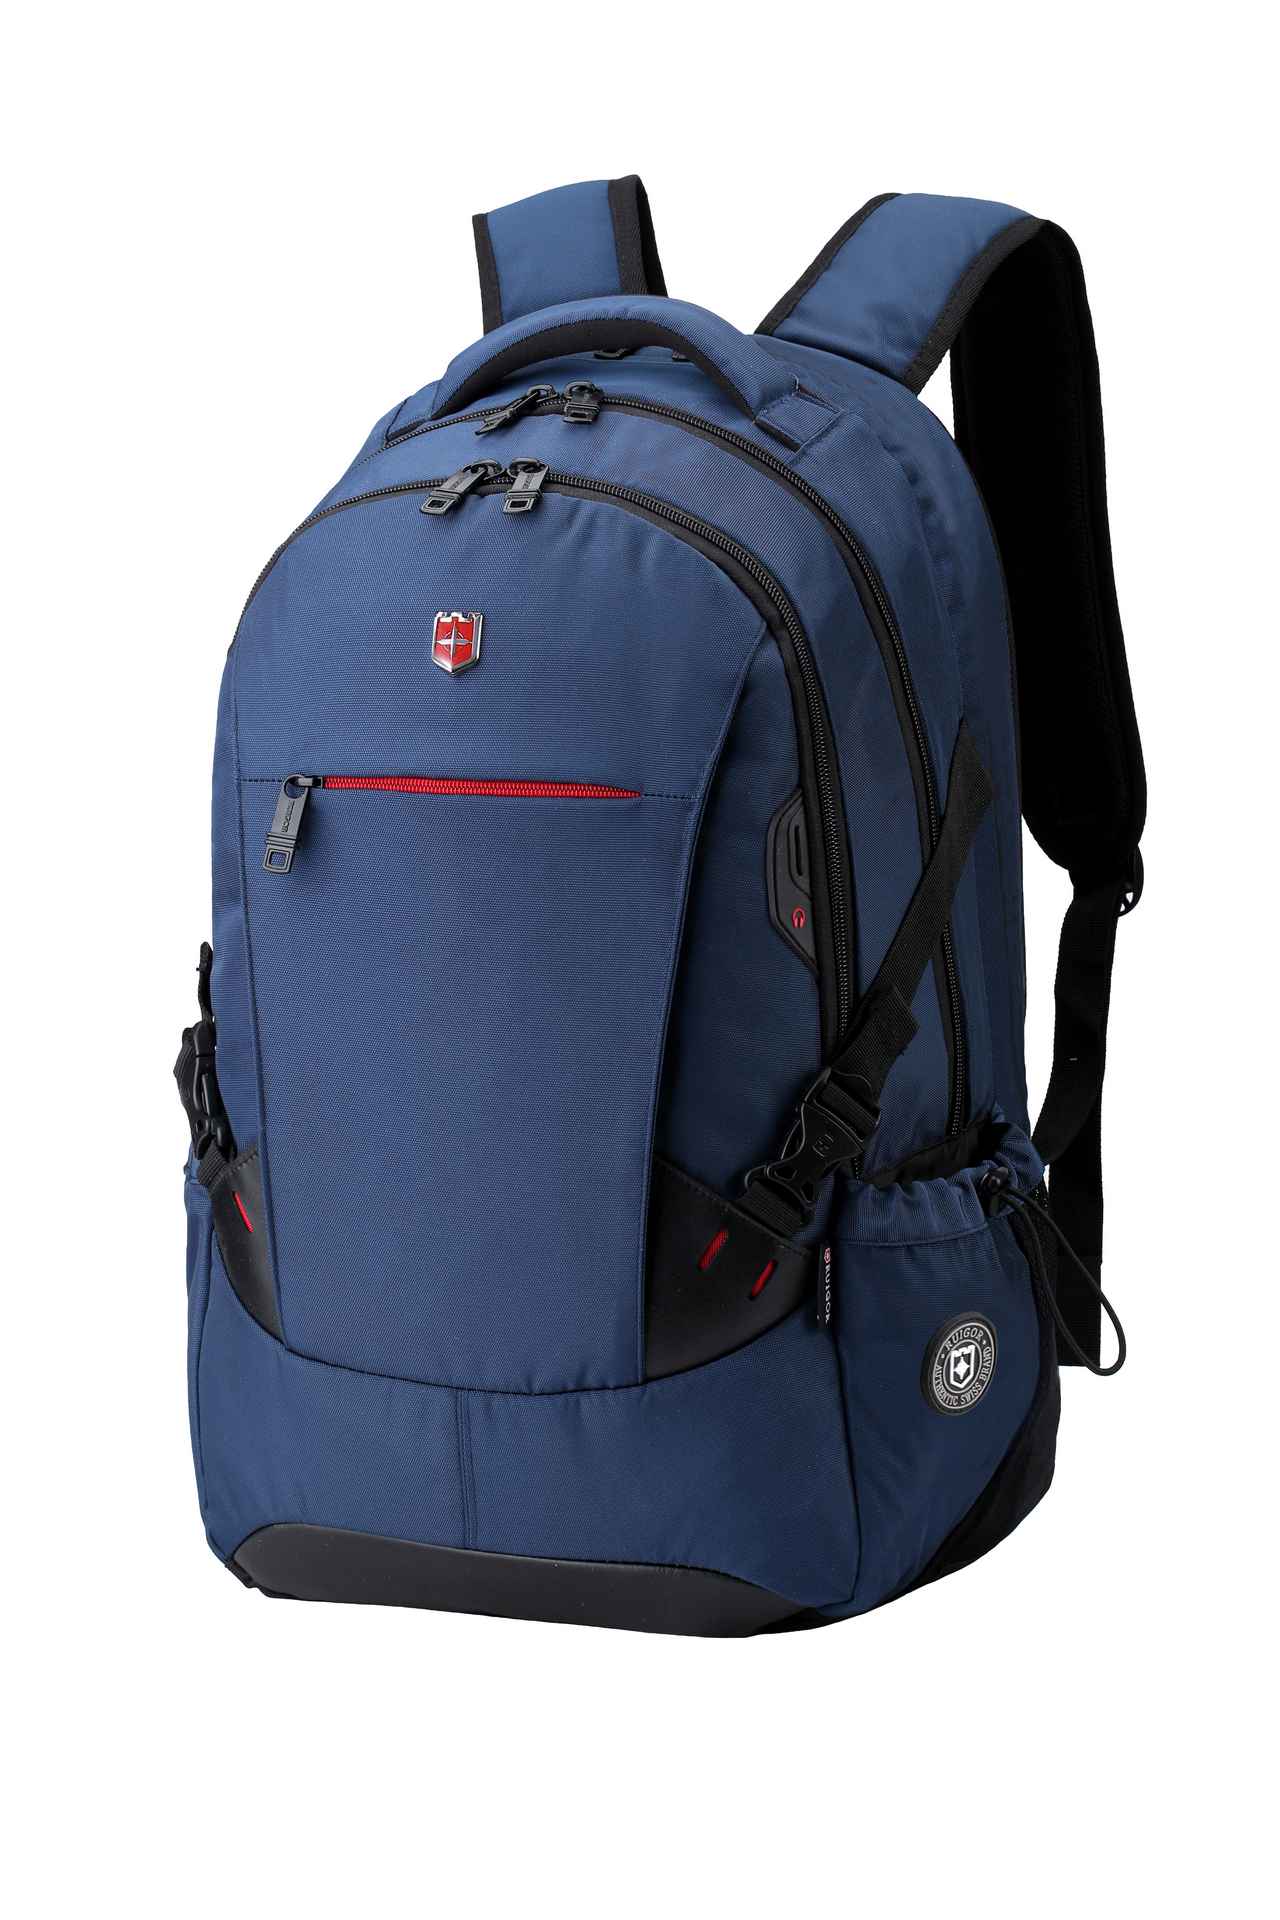 RUIGOR ICON 81 Laptop Backpack Blue